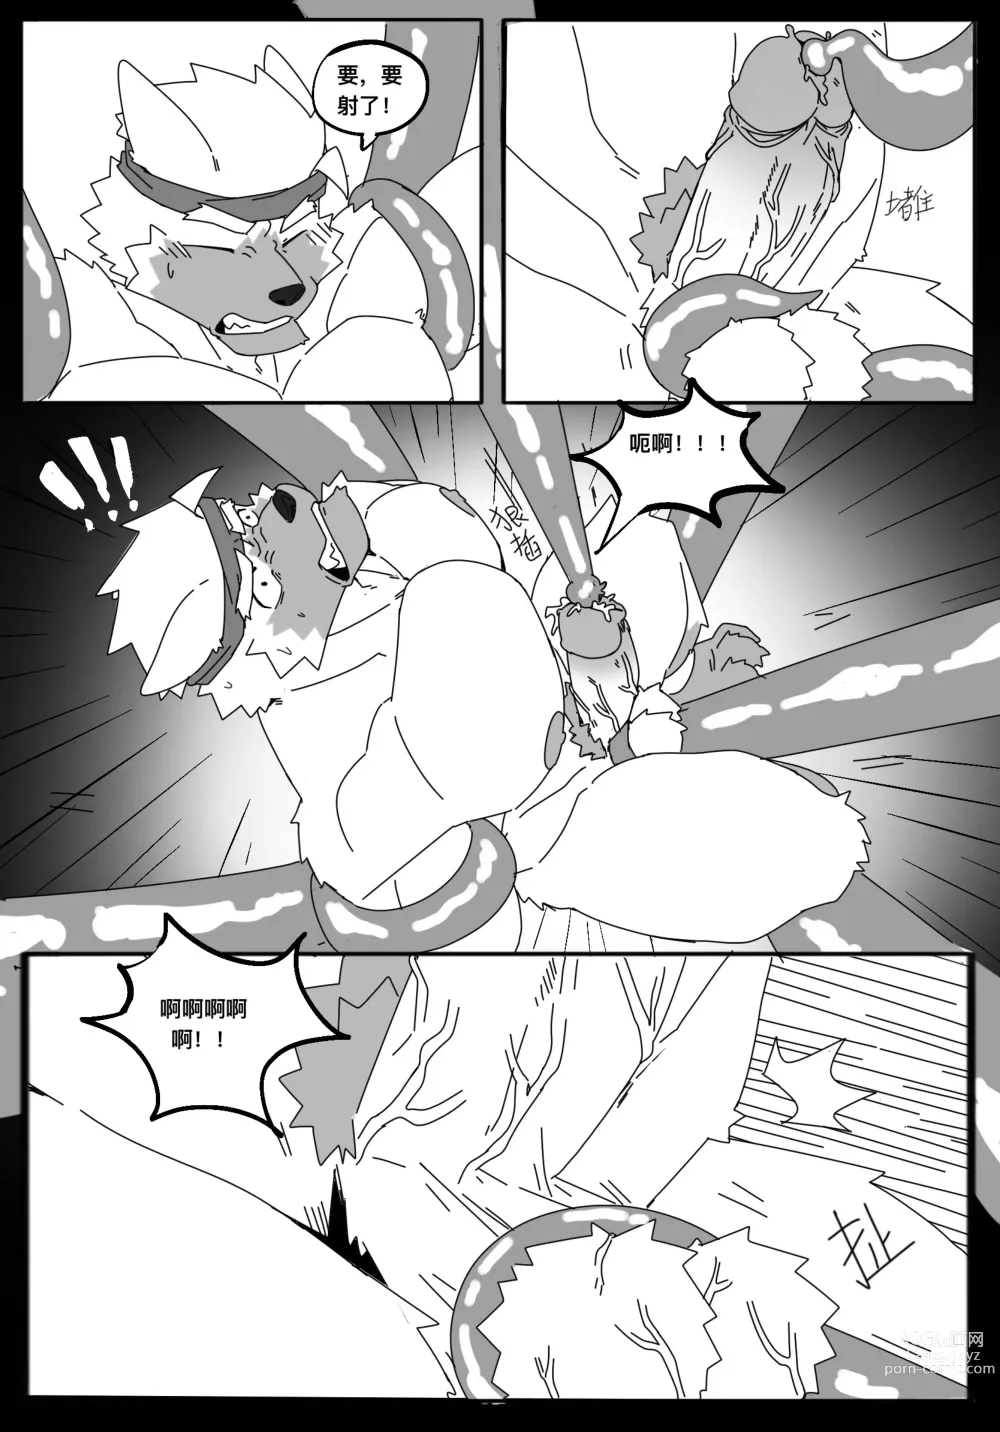 Page 8 of doujinshi Arujia tentacle  comic commission